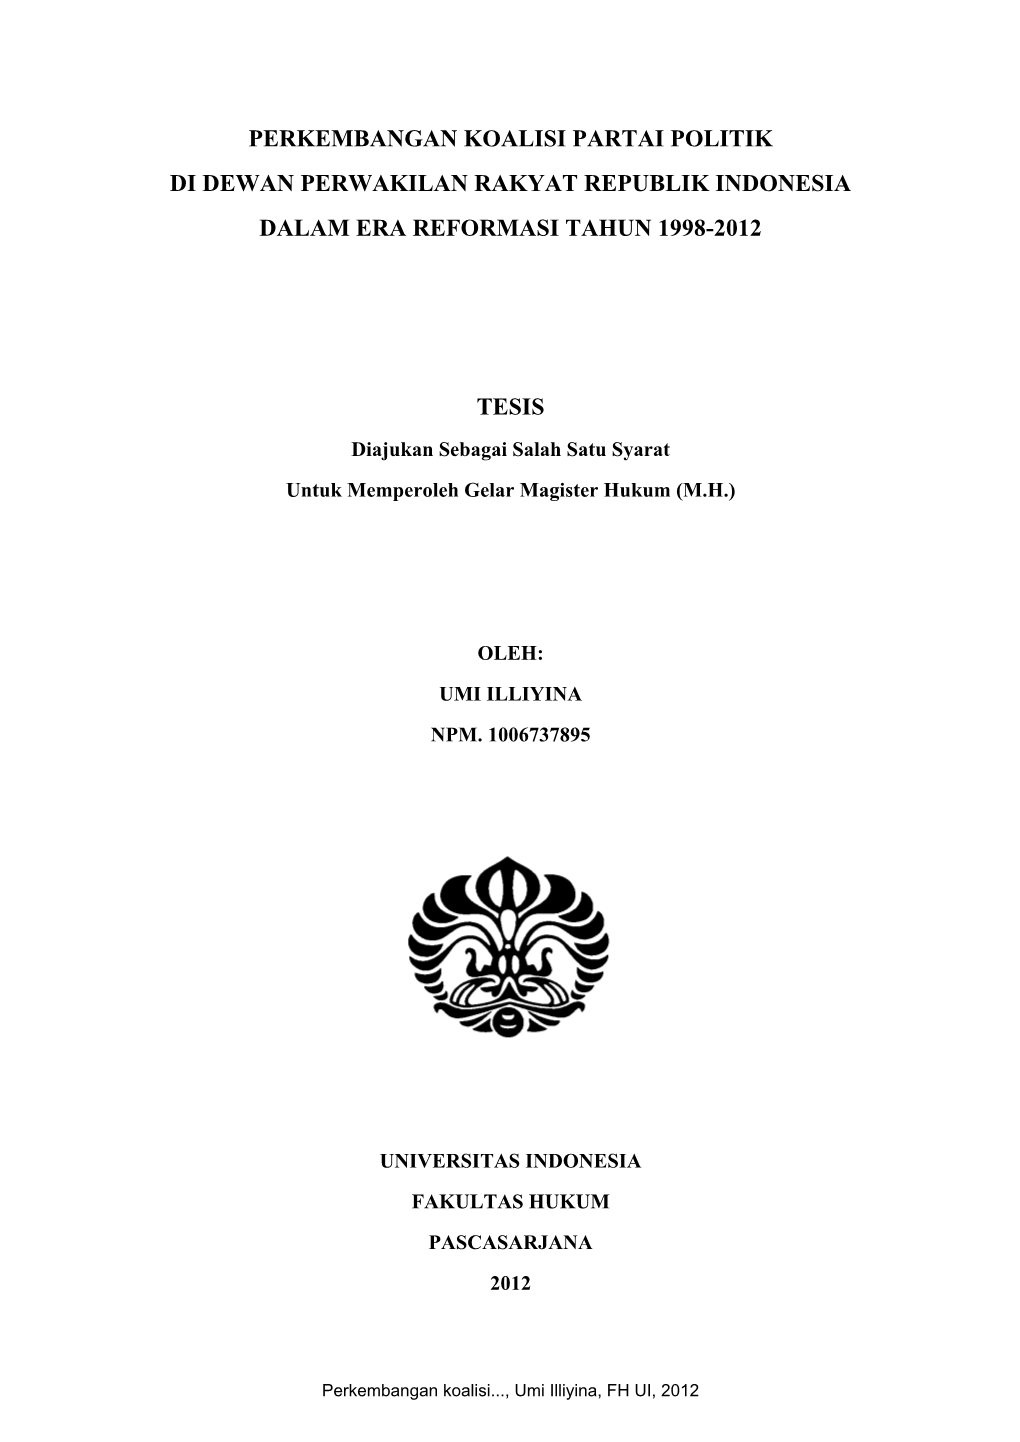 Perkembangan Koalisi Partai Politik Di Dewan Perwakilan Rakyat Republik Indonesia Dalam Era Reformasi Tahun 1998-2012